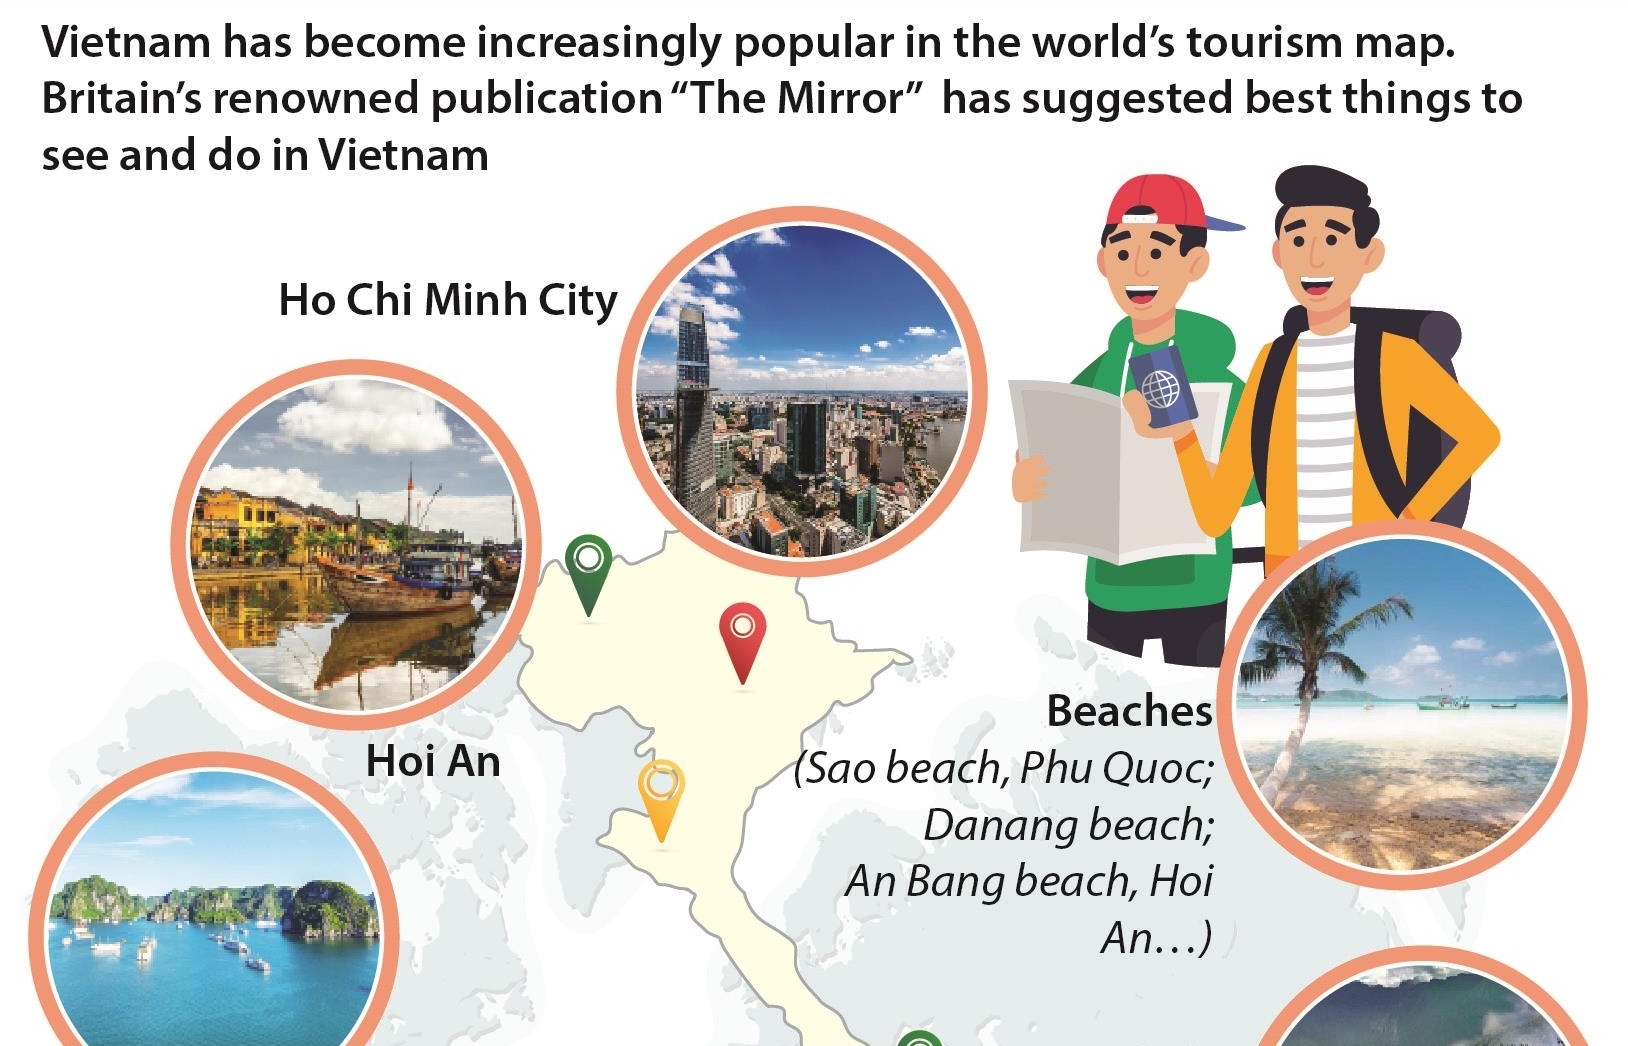 The Mirror recommends 10 best destinations of Vietnam